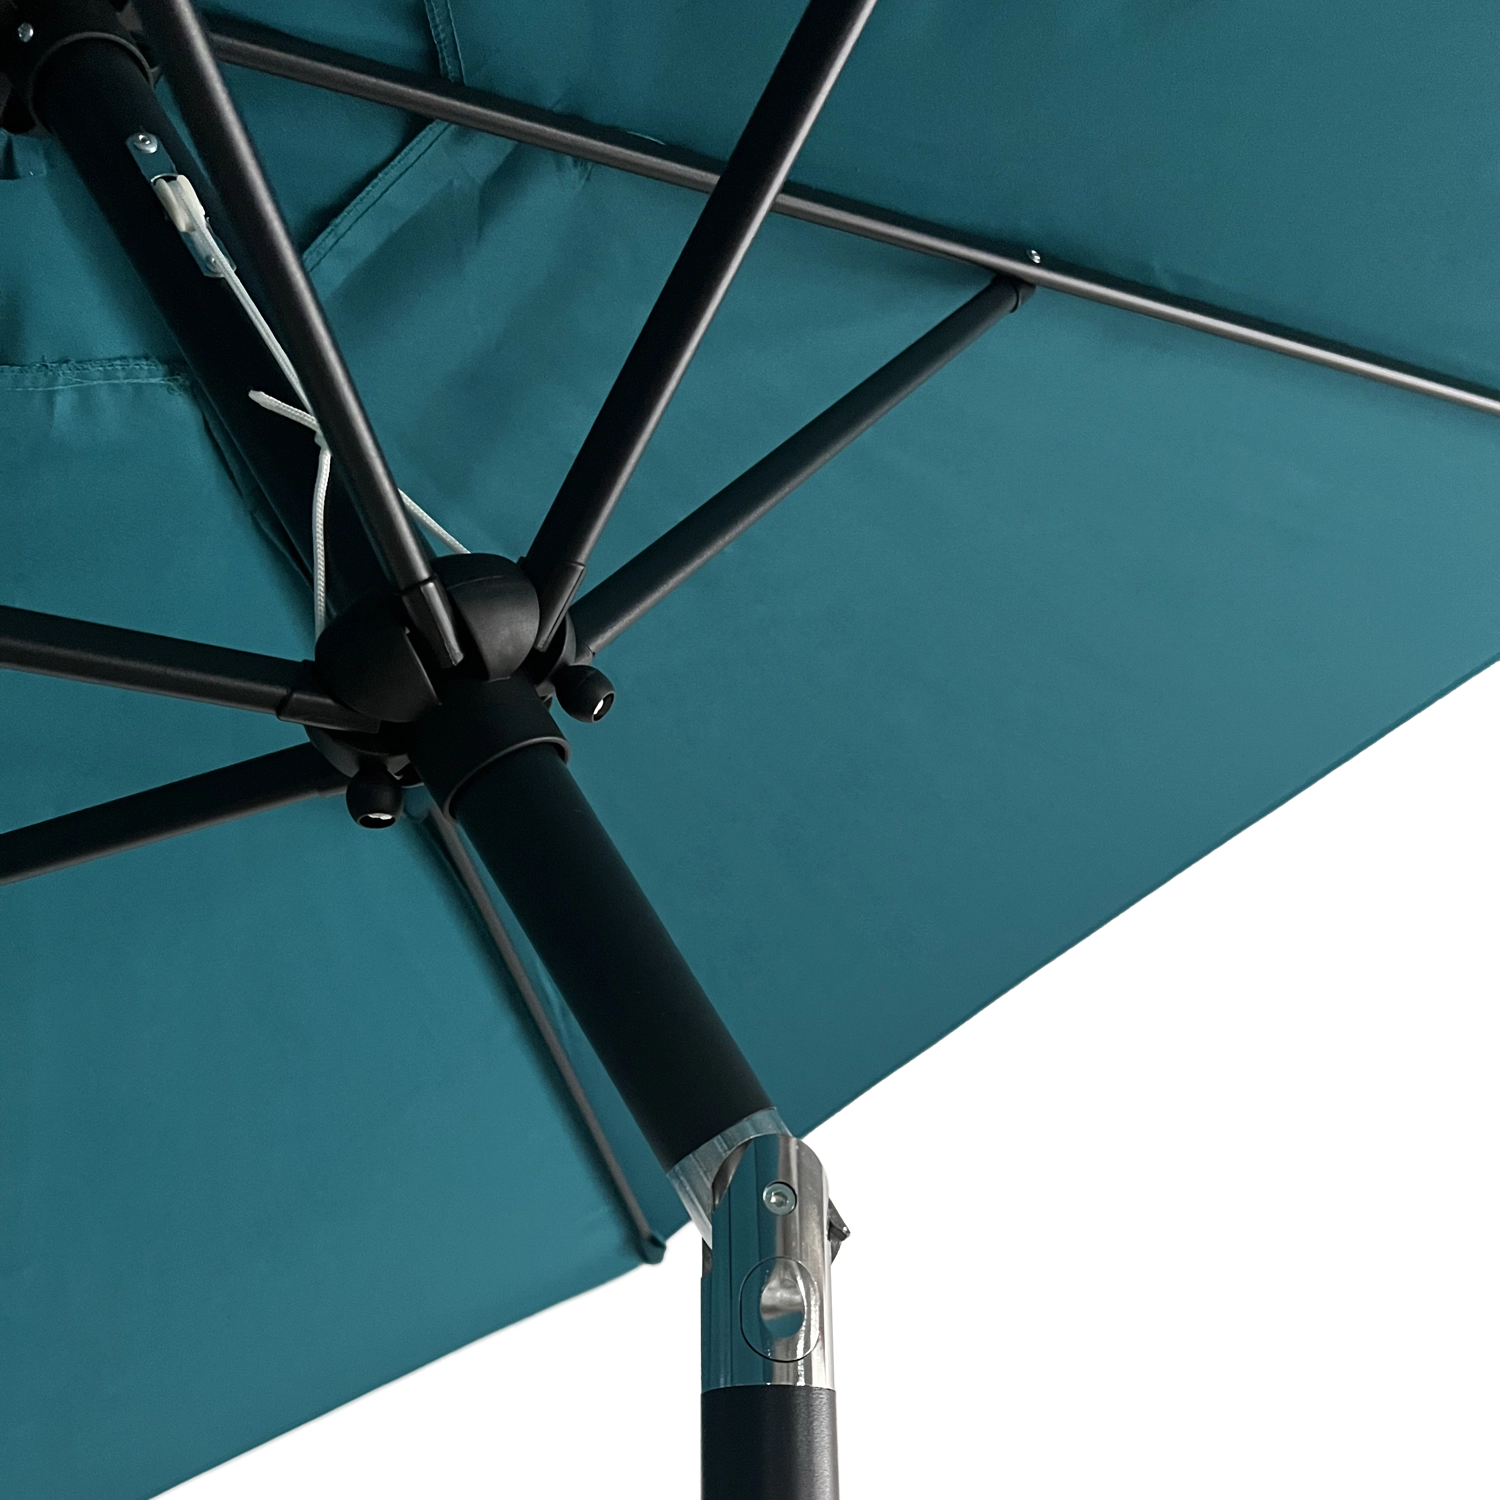 HAPUNA guarda-chuva redondo direito 2,70m de diâmetro azul